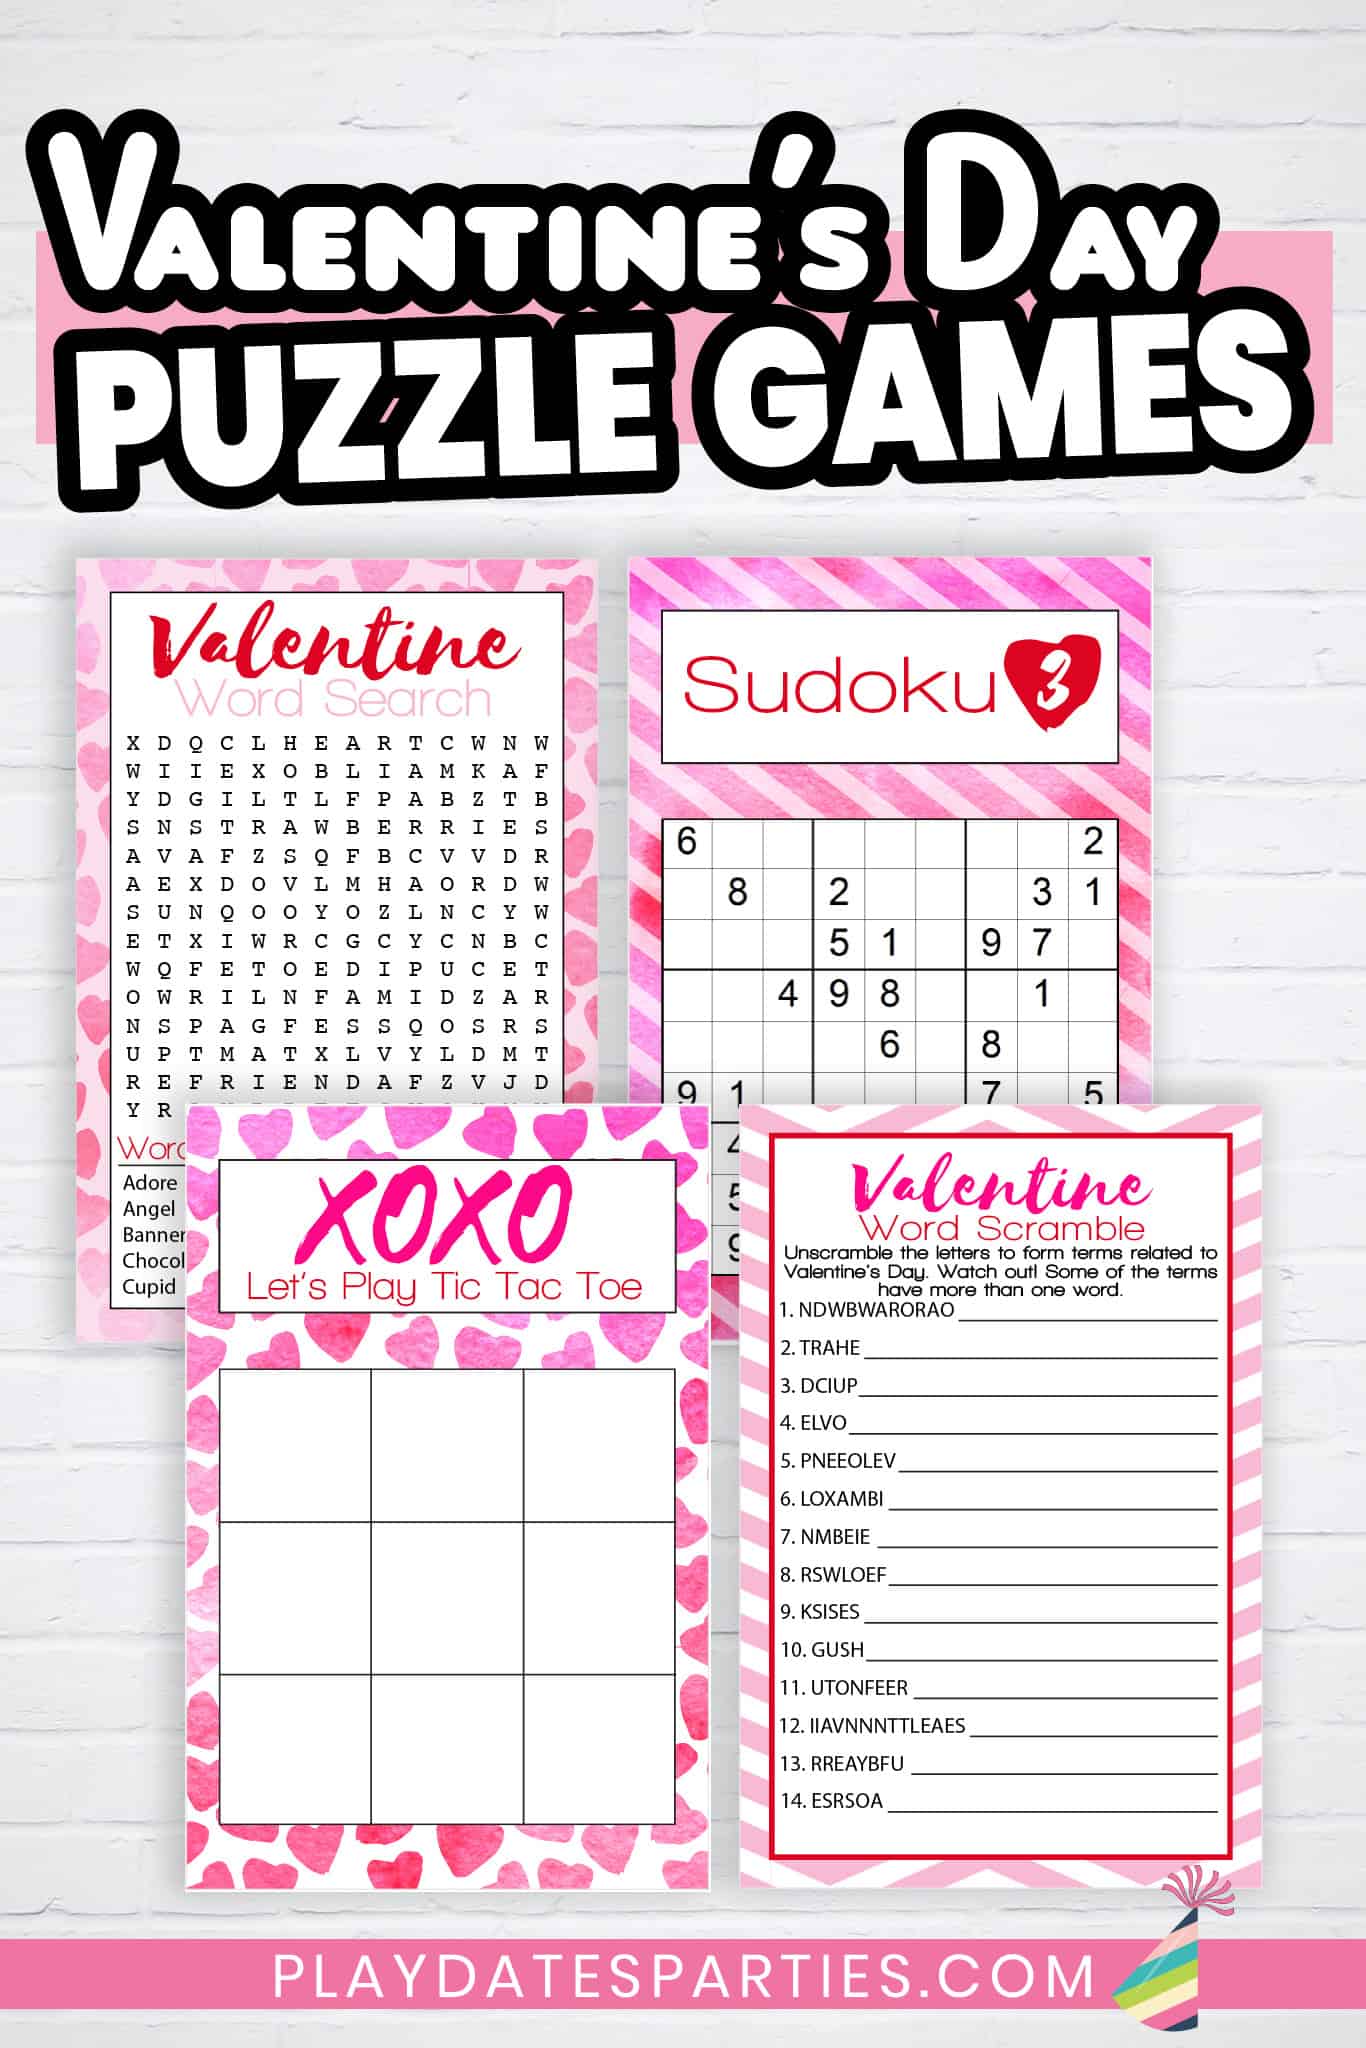 Valentine's Day Puzzle Games